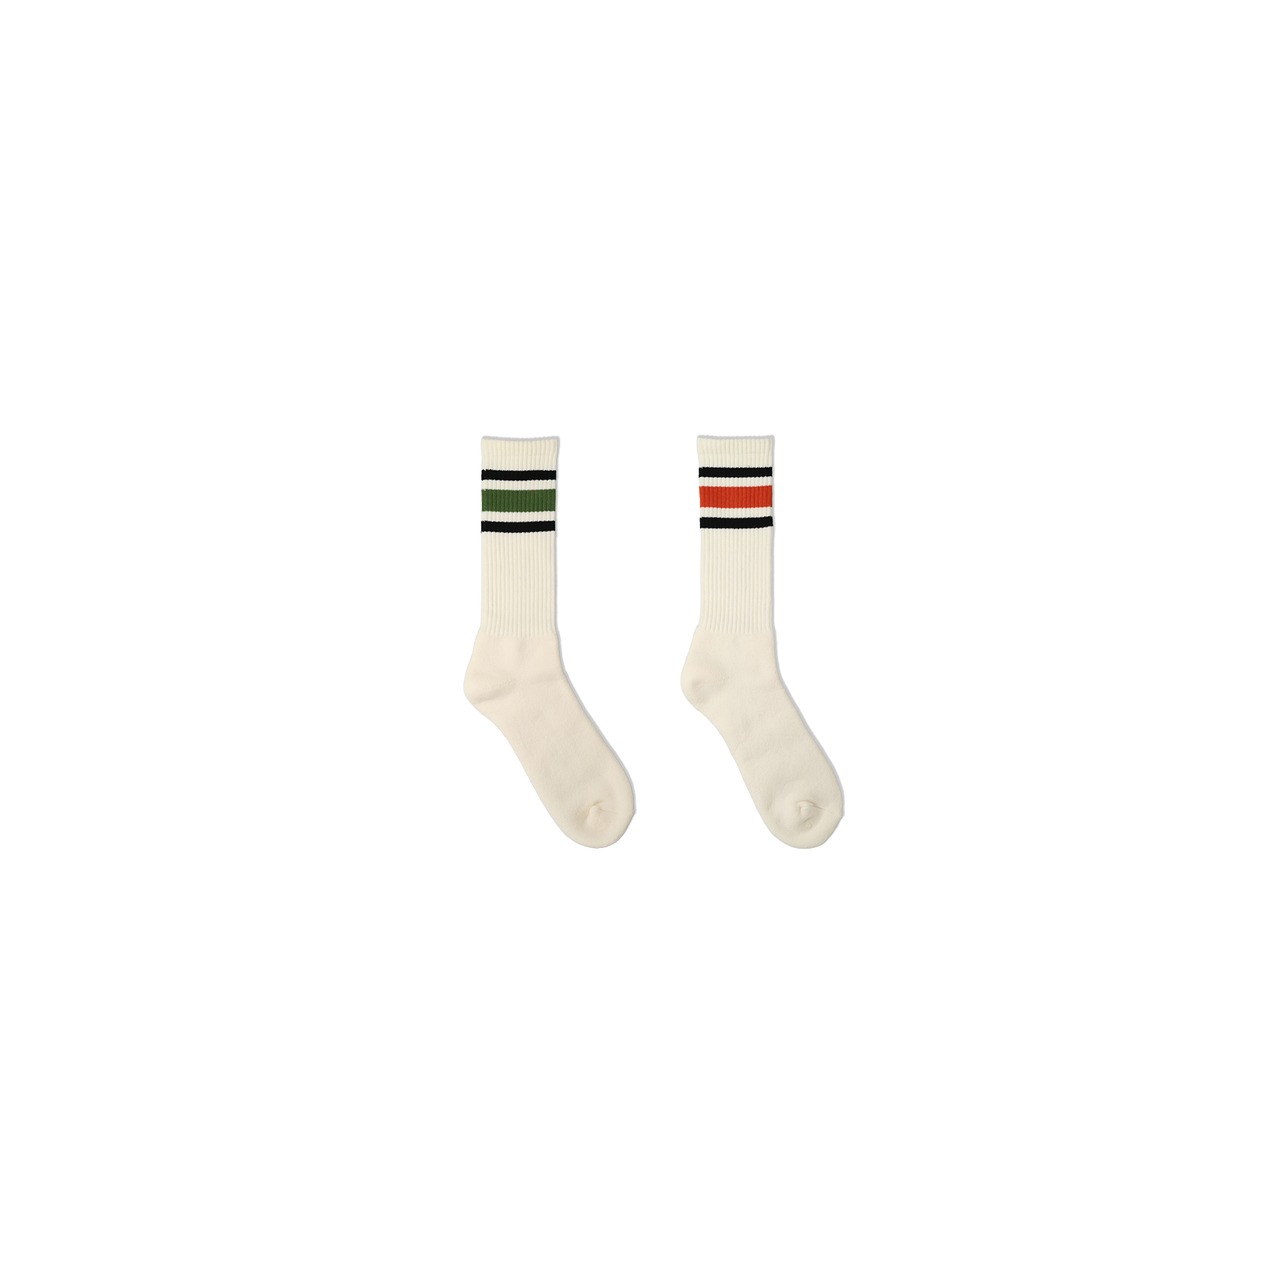 decka 80’s Skater socks 　”Japan Limited Edition”